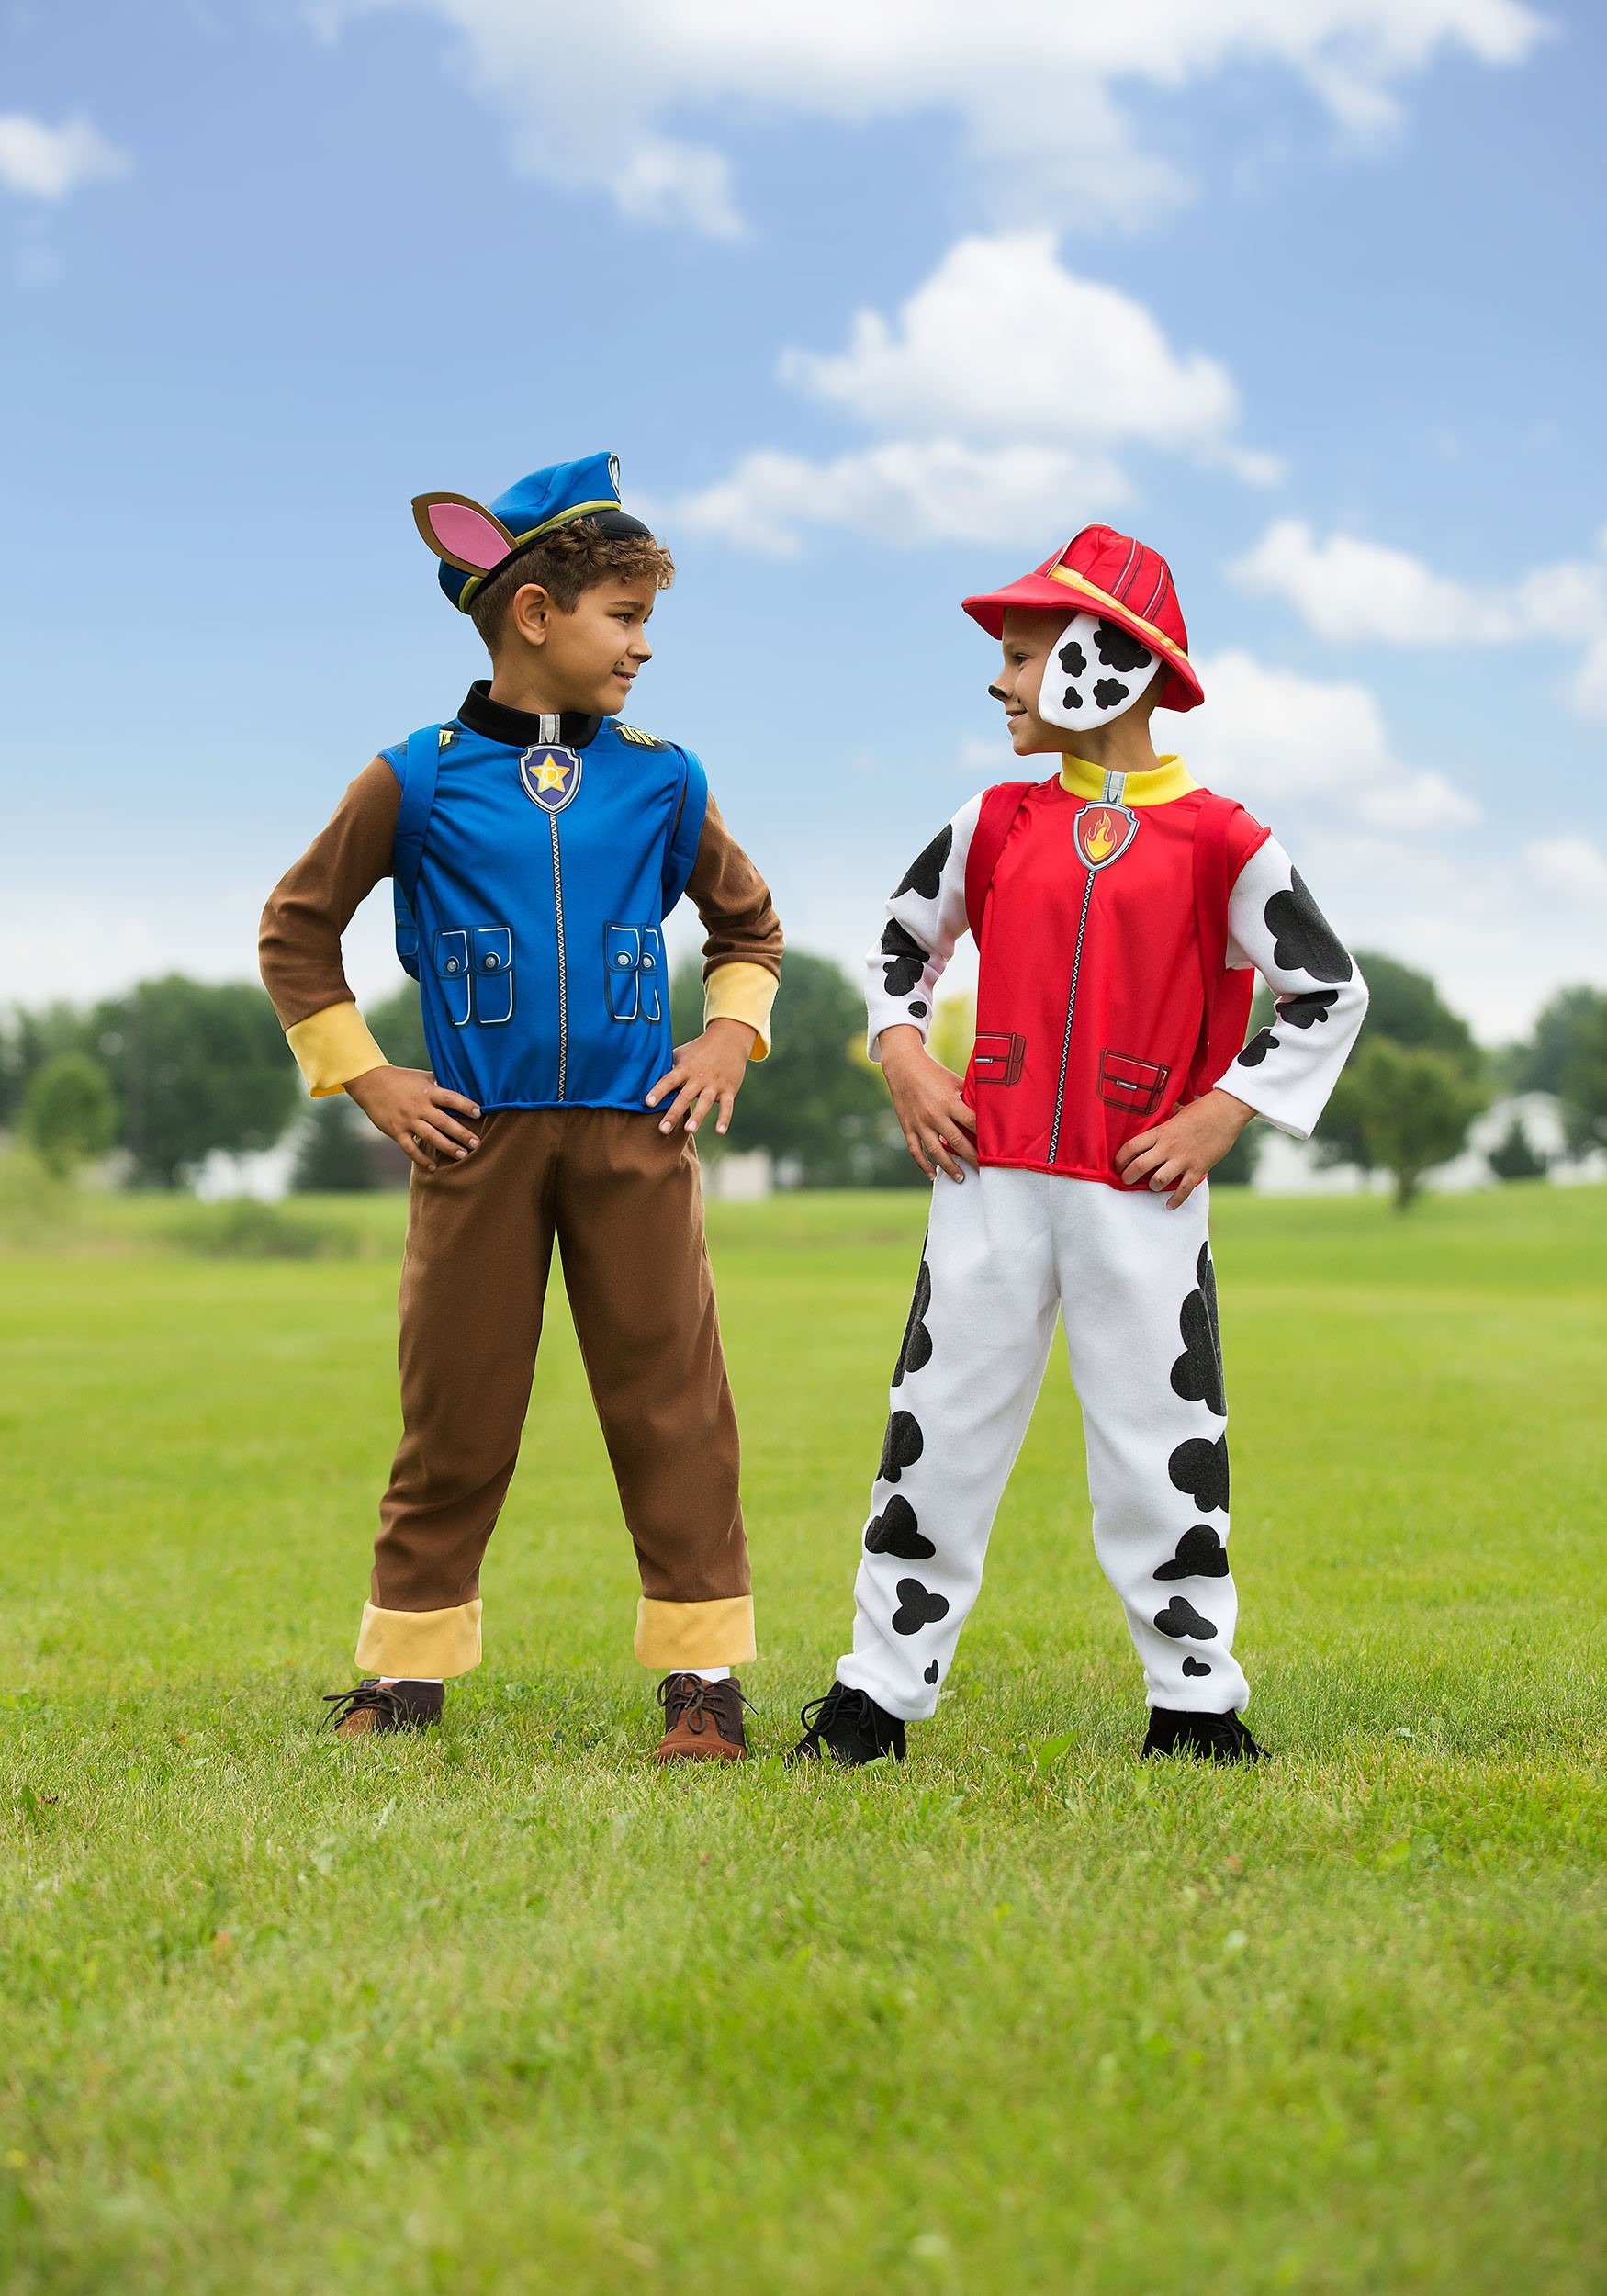 Paw Patrol: Marshall Kids Costume